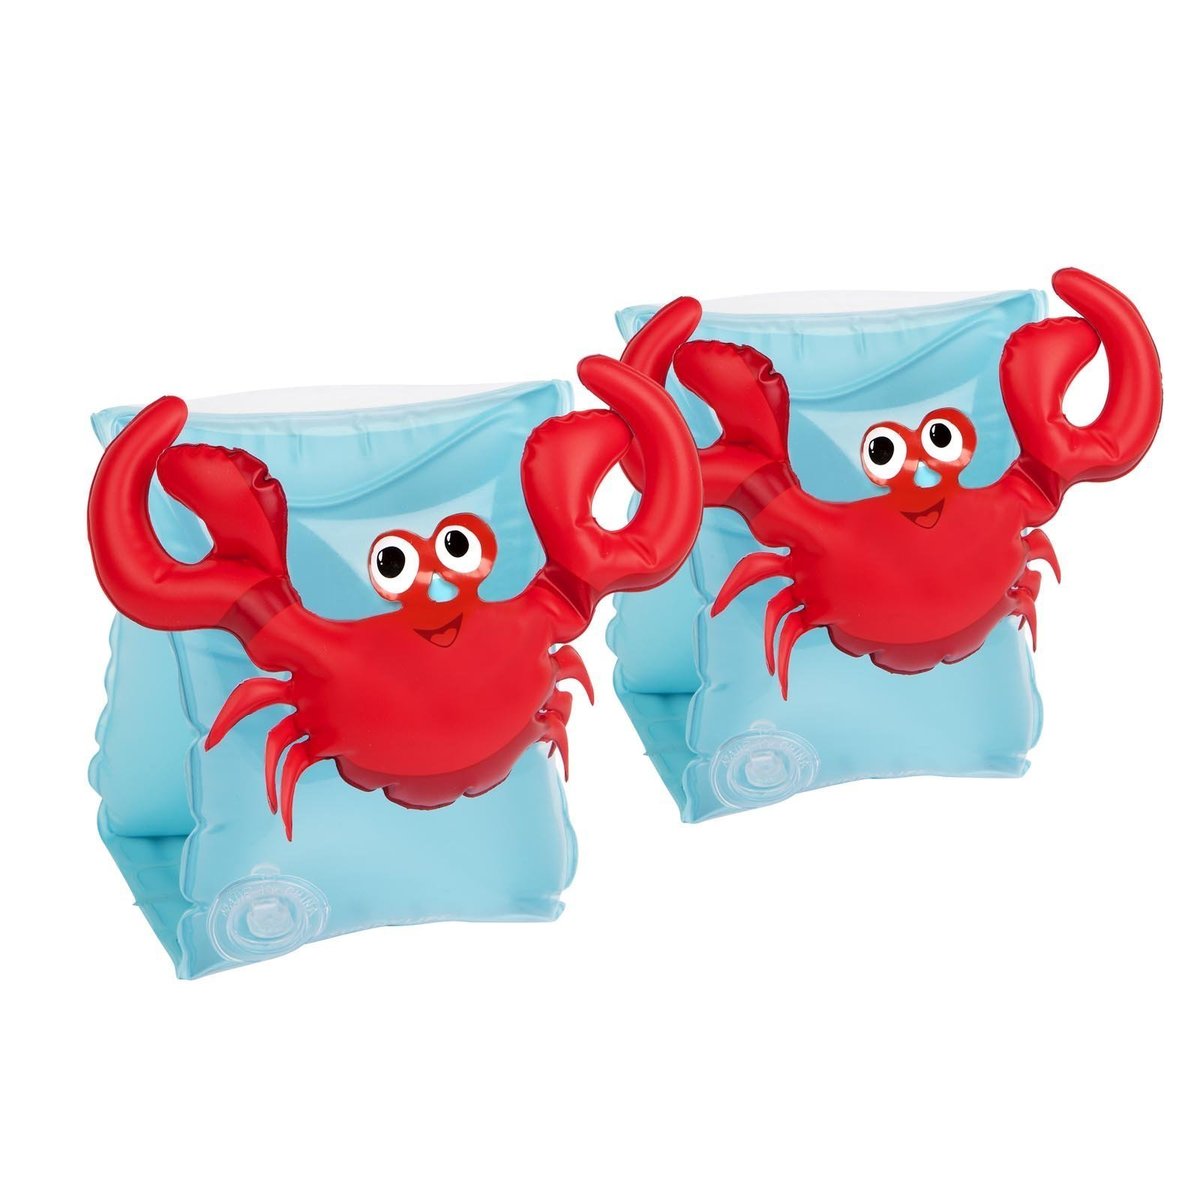 Crabby Arm Floats